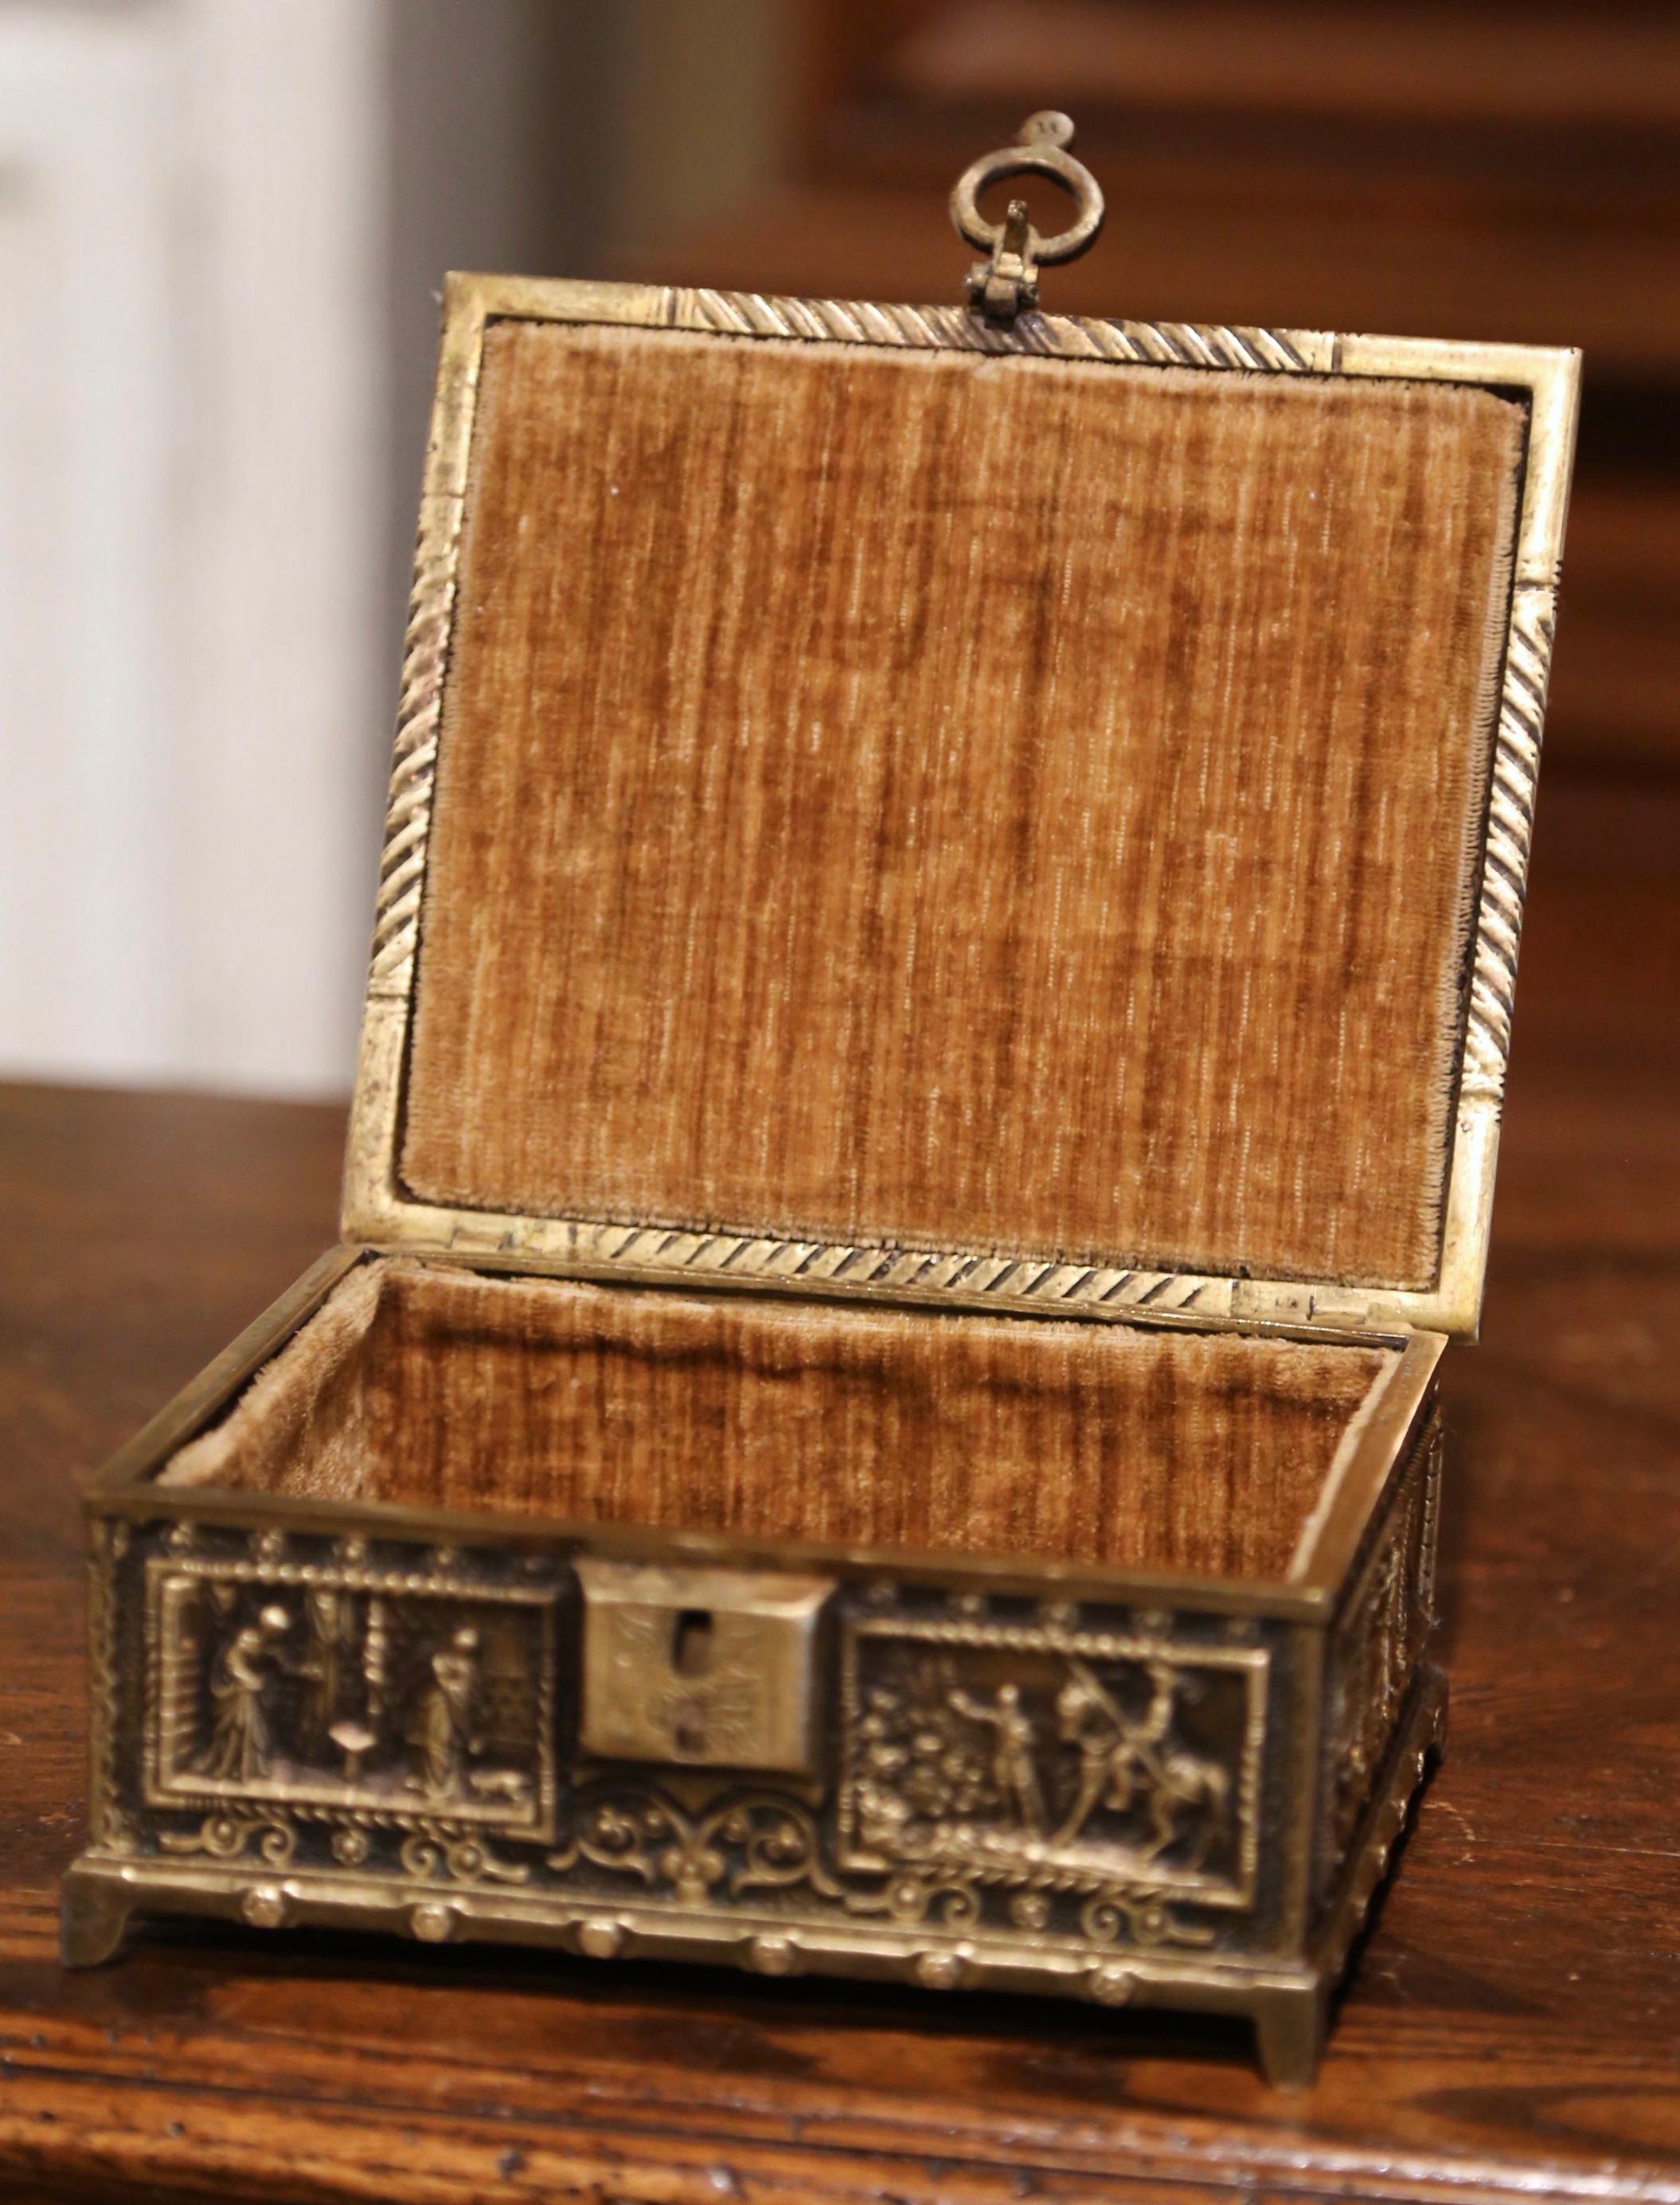 19th Century French Patinated Bronze Jewelry Box with Mythology Decor 1